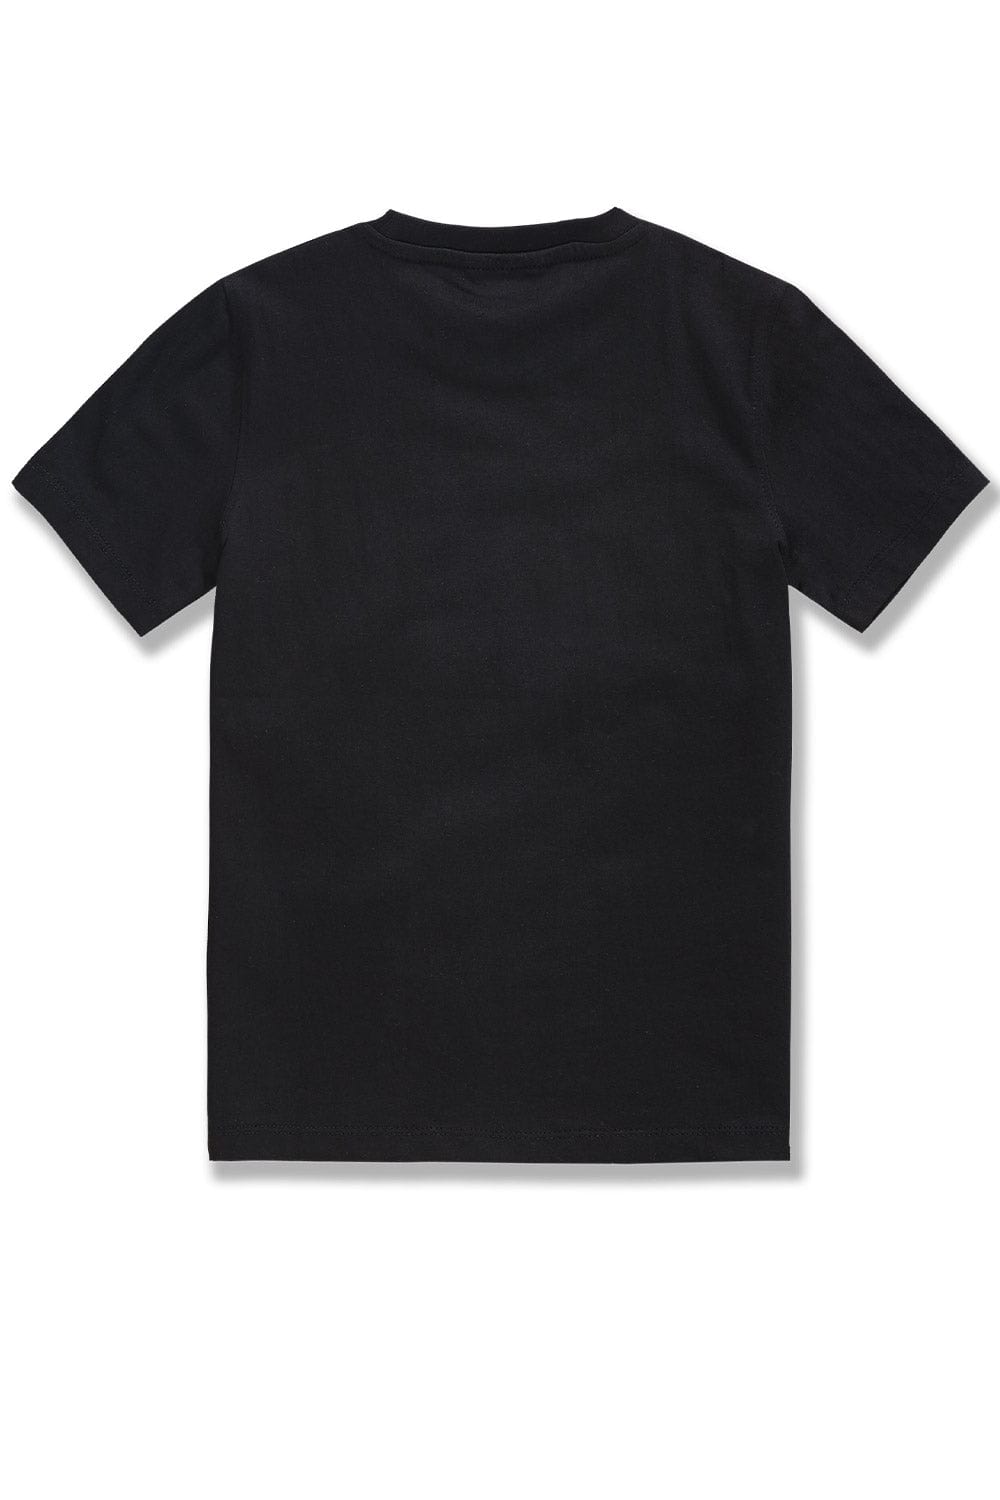 JC Kids Kids Blak Panther T-Shirt (Black)